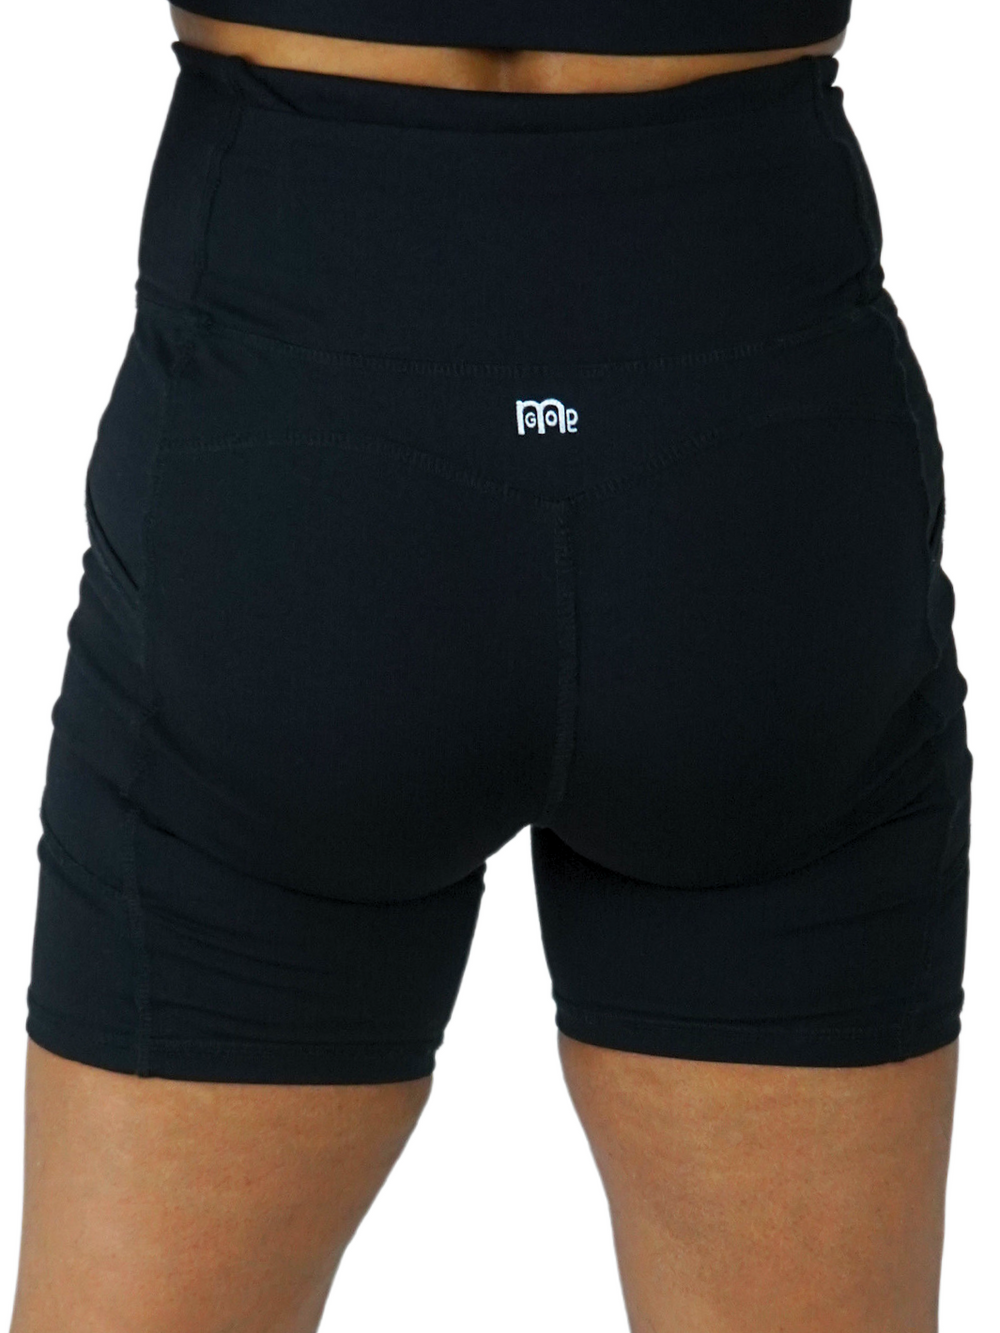 High waist ab support, Bermuda length, Biker shorts, Black color with GODinme logo at lower back